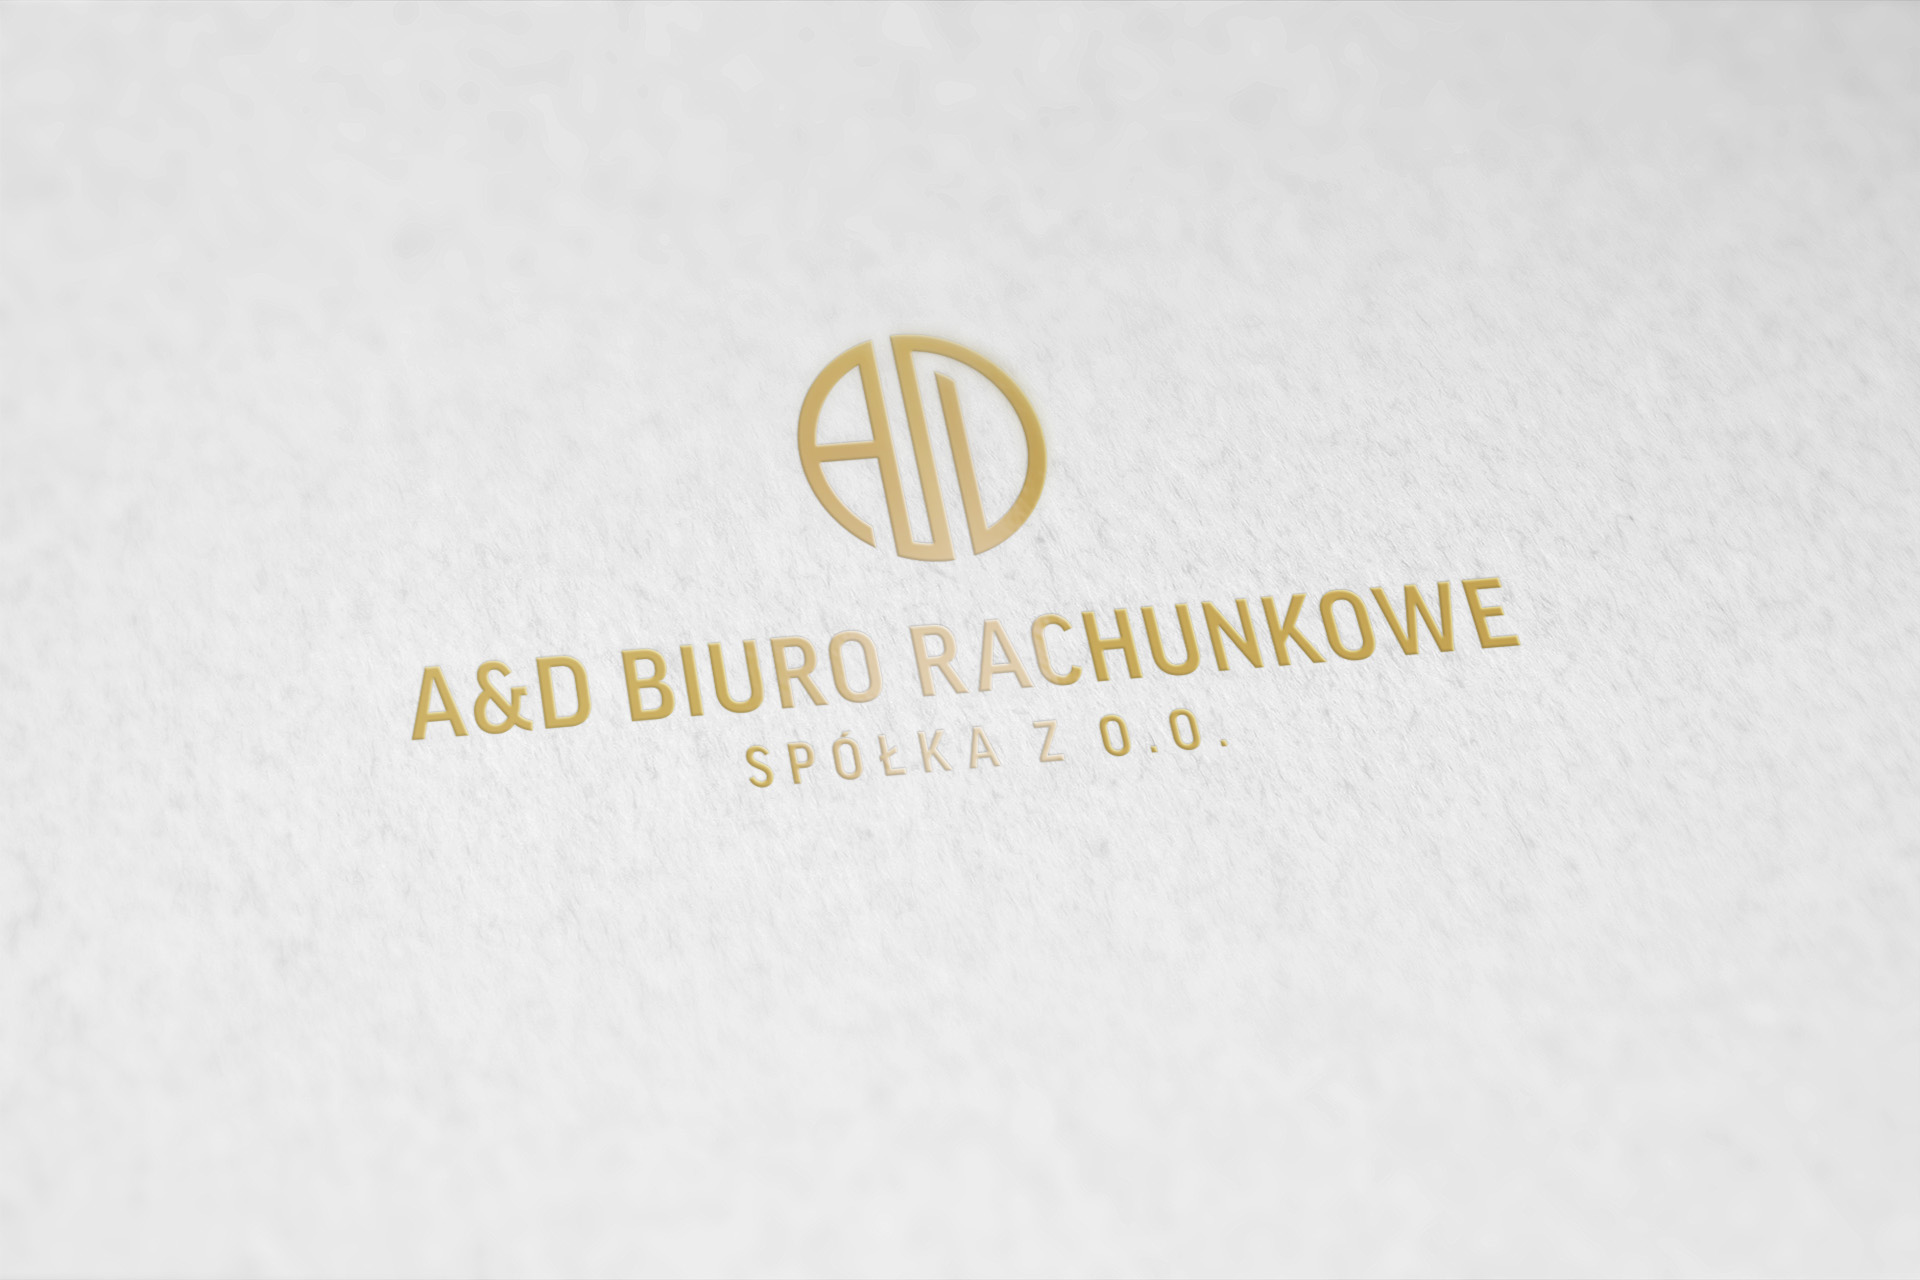 A&D Biuro Rachunkowe, Logo